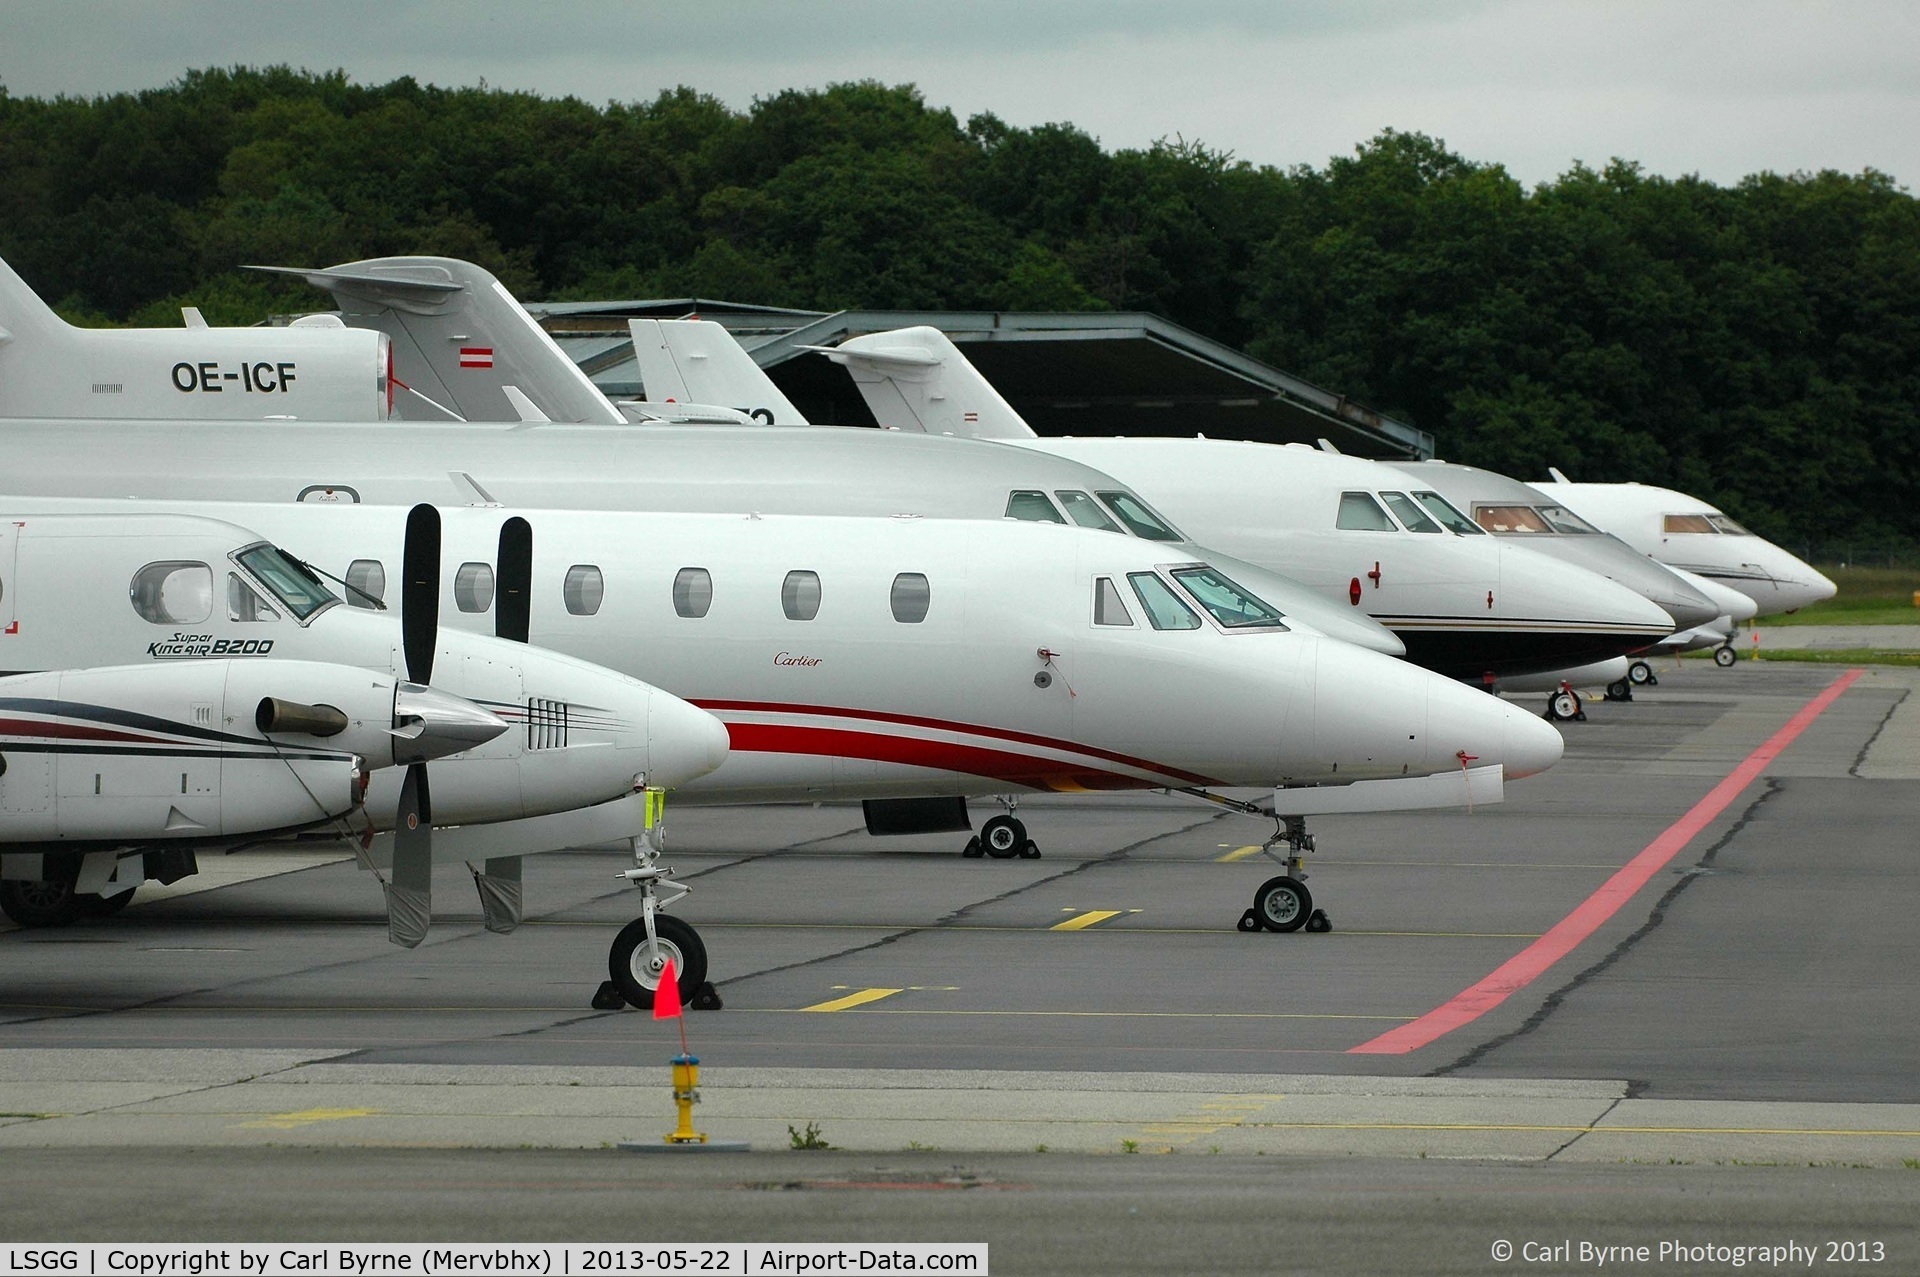 Geneva Cointrin International Airport, Geneva Switzerland (LSGG) - A line up of aircraft on the RUAG ramp